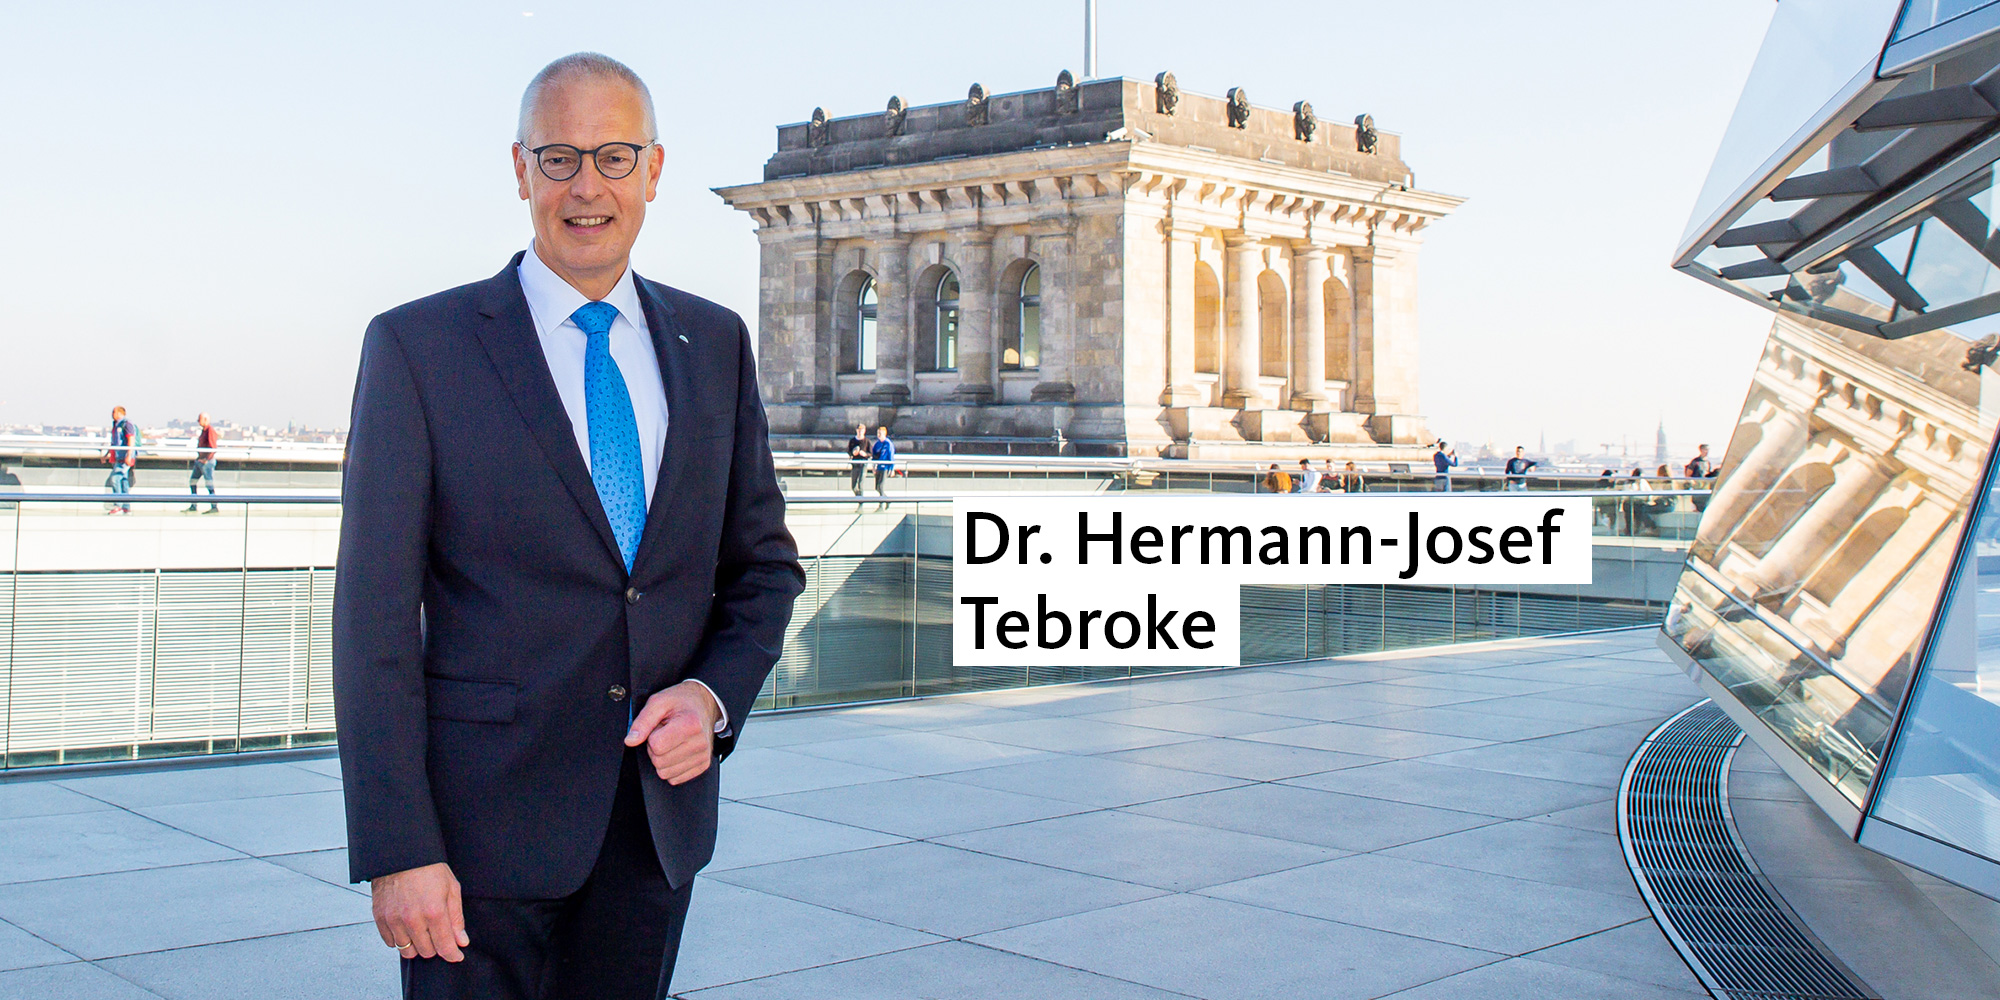 Dr. Hermann-Josef Tebroke